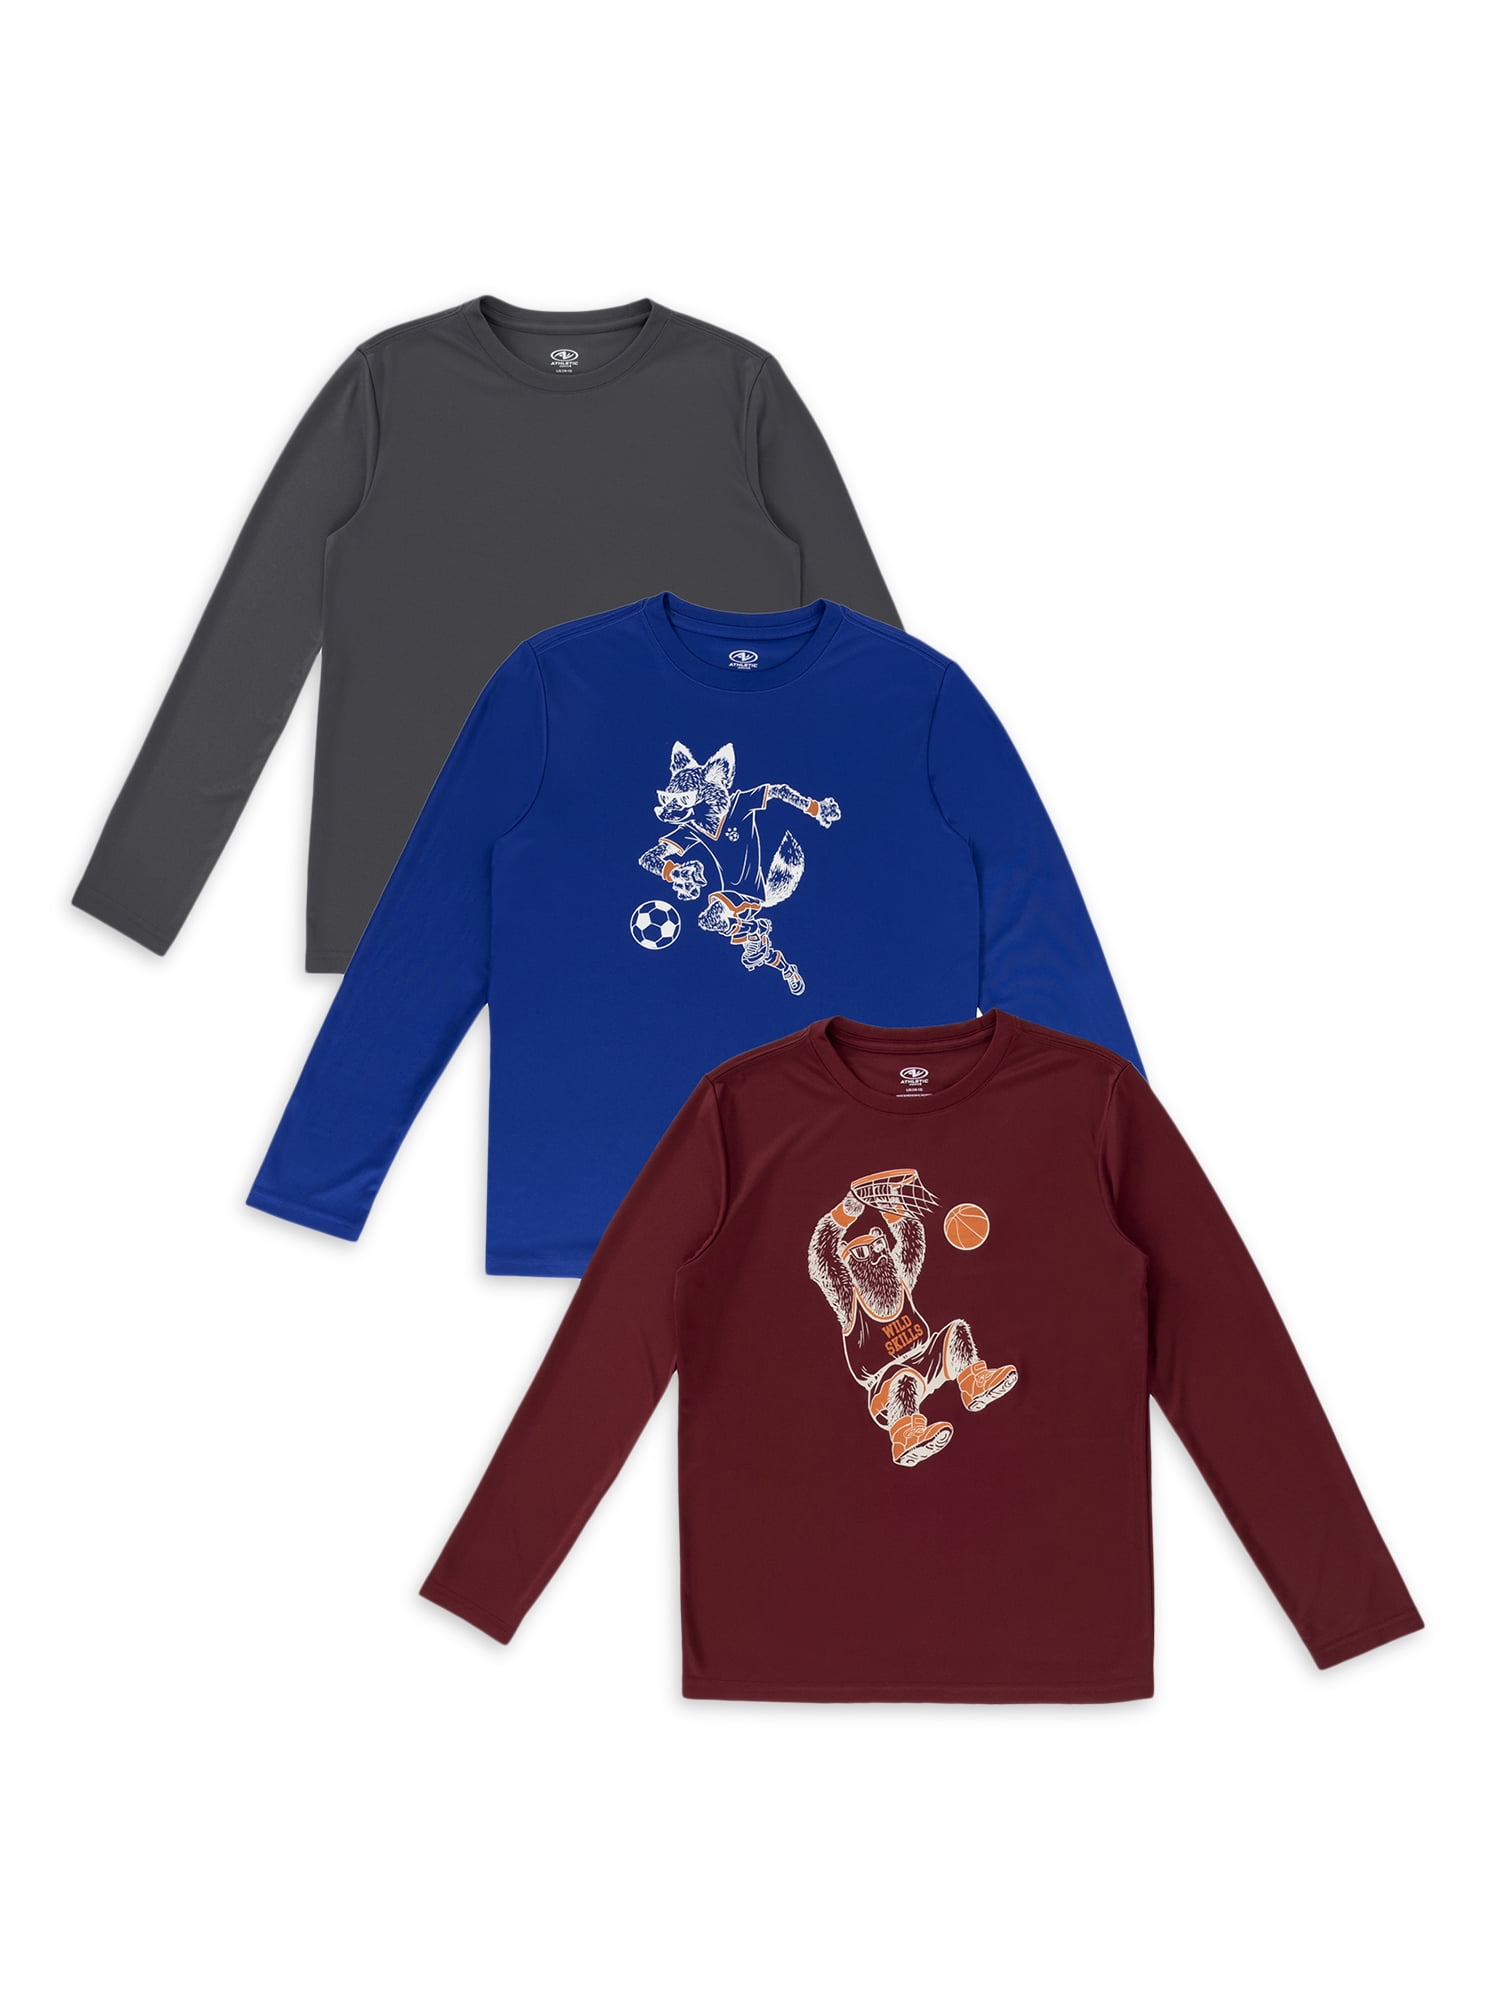 Athletic Works Boys Graphic 3-Pack Shirts, Sizes 4-18 & Husky - Walmart.com